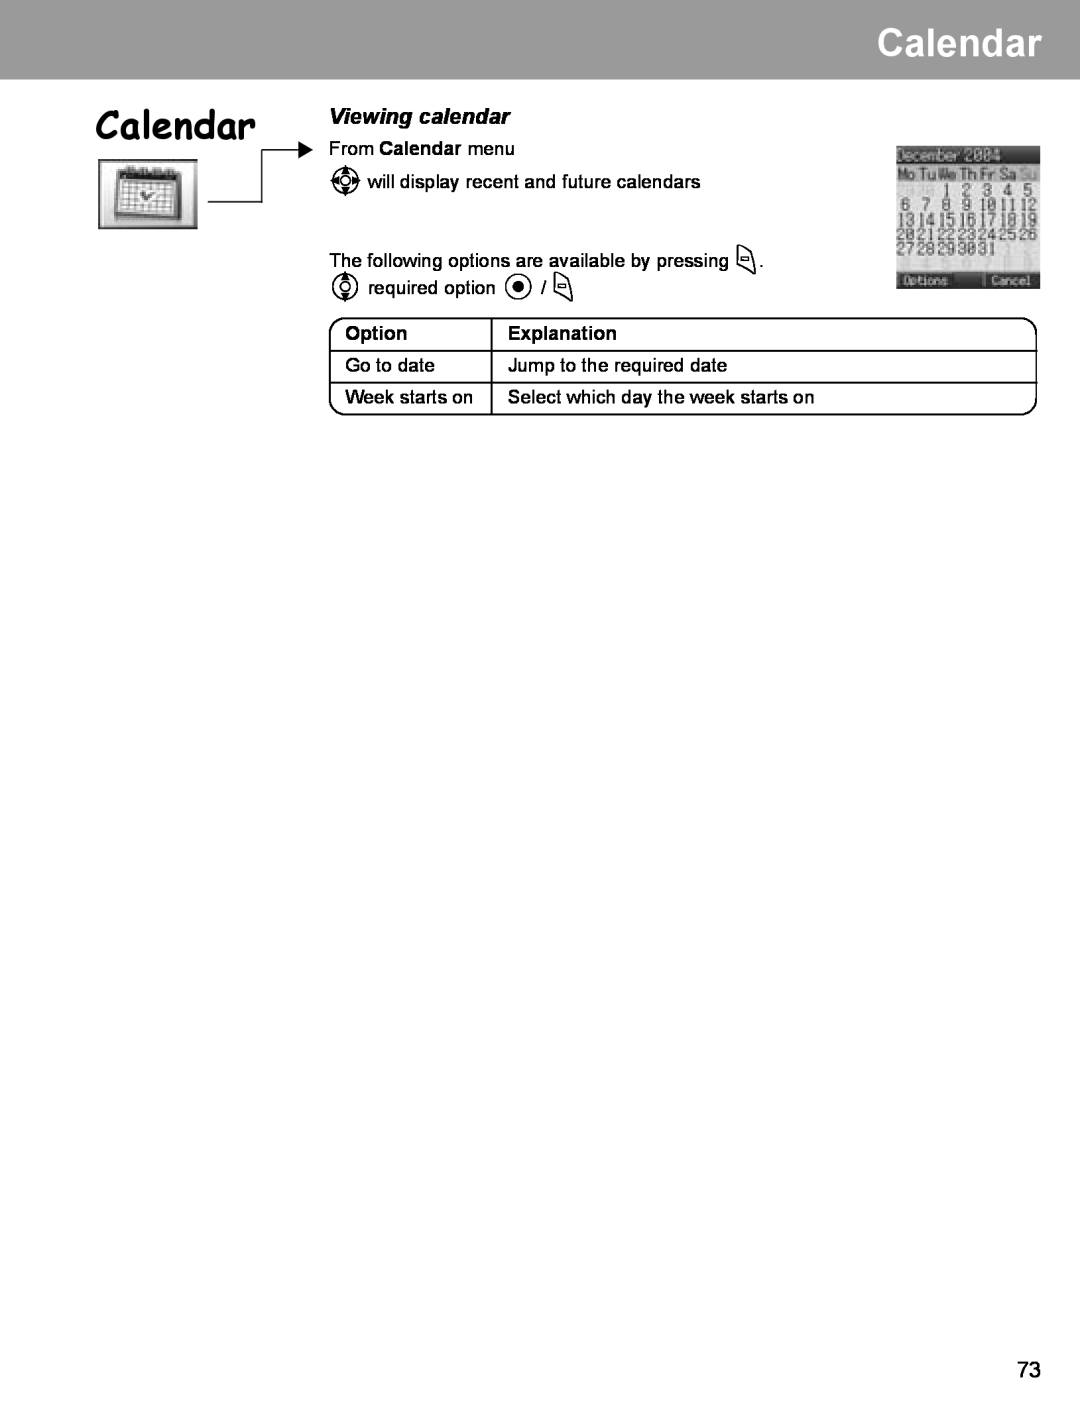 Panasonic EB-X400 operating instructions Viewing calendar, Option, Explanation, From Calendar menu 